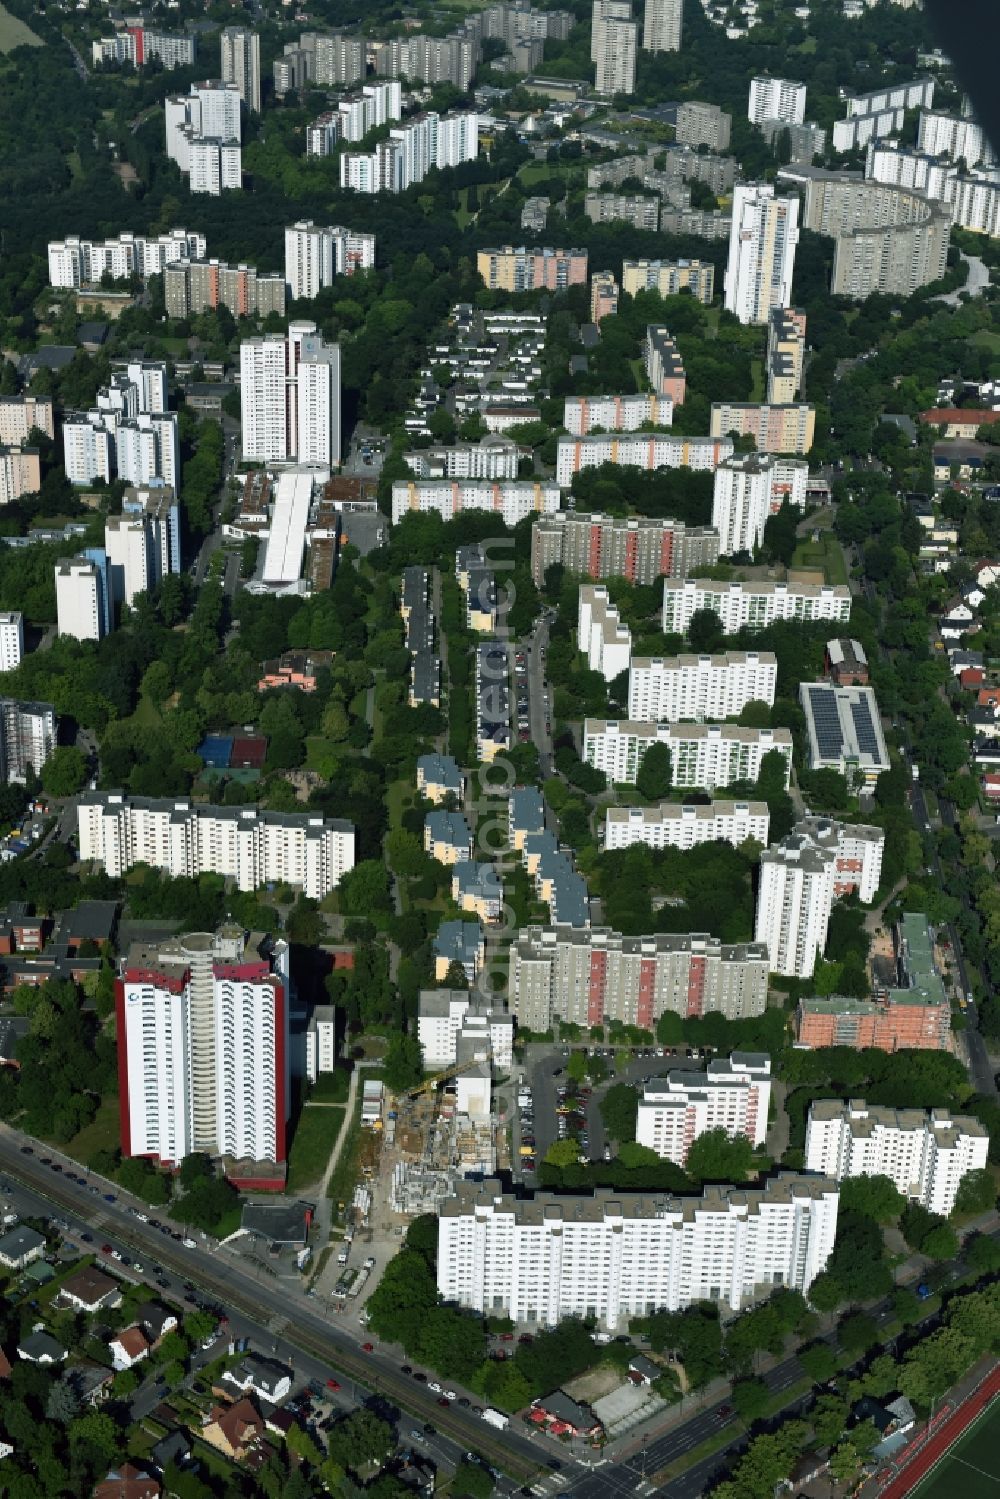 Berlin from above - Neukoelln district in the urban area in Berlin. Here the large housing estate Gropiusstadt in Rudow